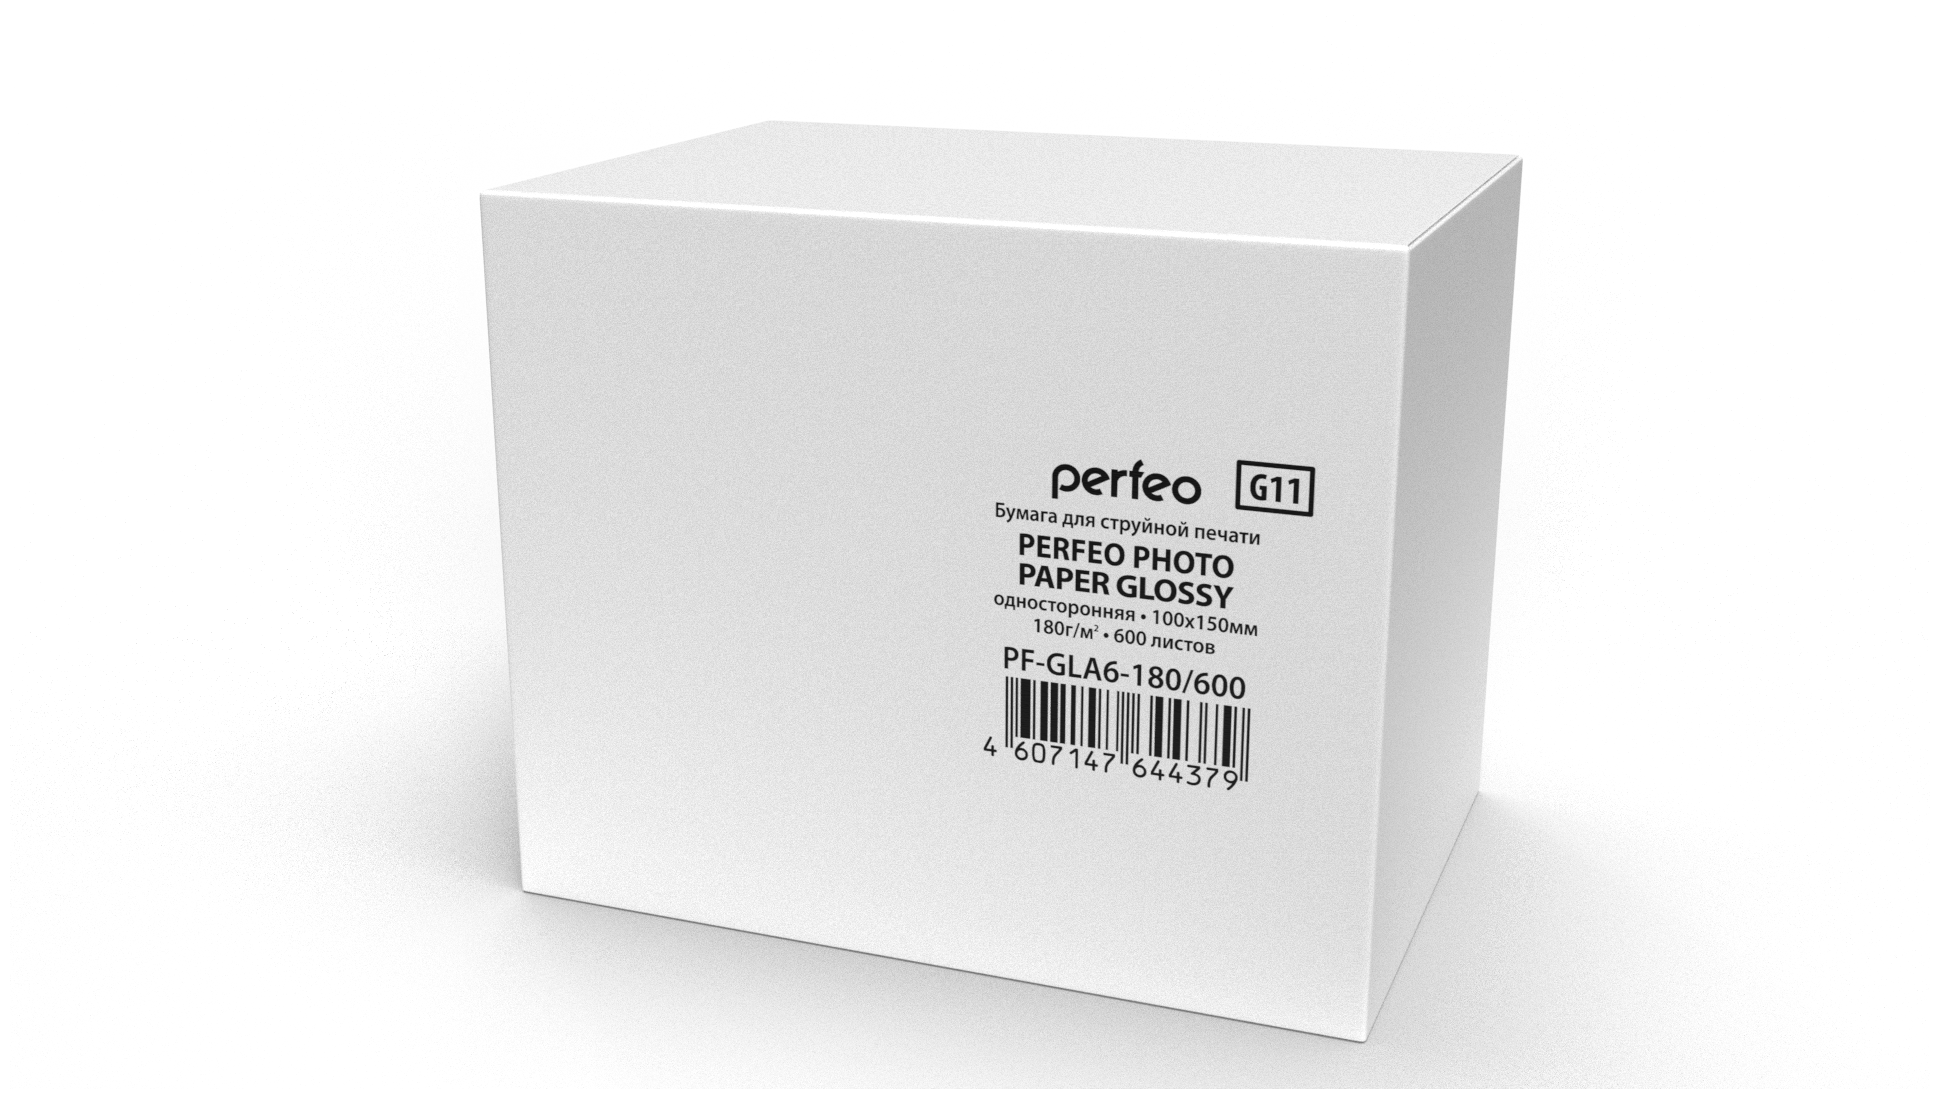 Perfeo фотобумага Perfeo PF-GLA6-180/600 Бумага Perfeo глянцевая 600л, 10х15 180 г/м2 (G11)